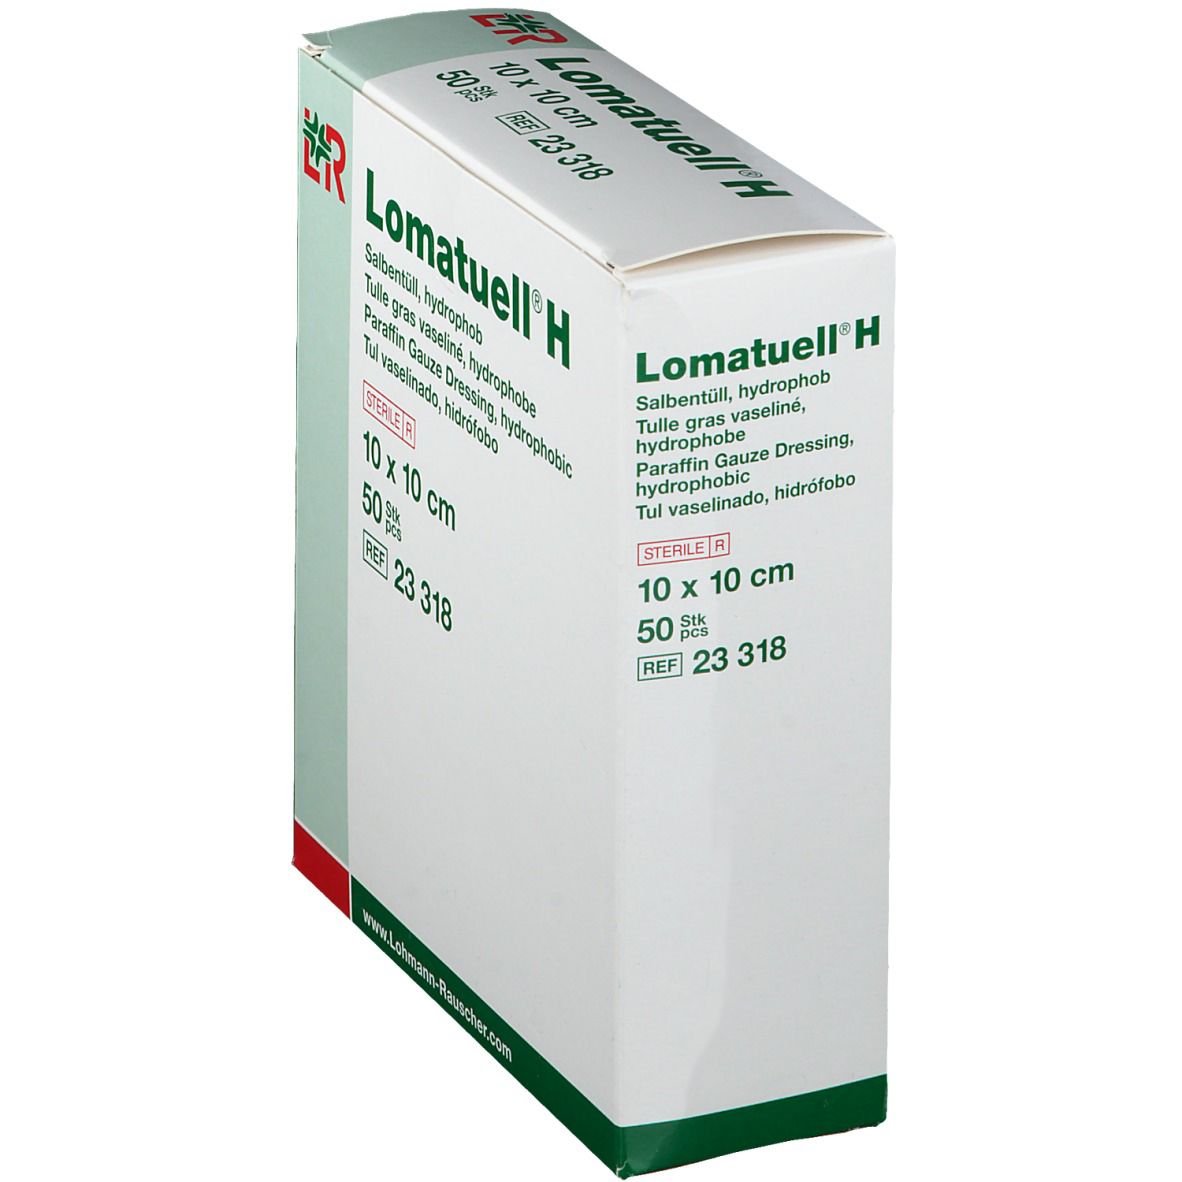 Lomatuell® H 10 cm x 10 cm steril